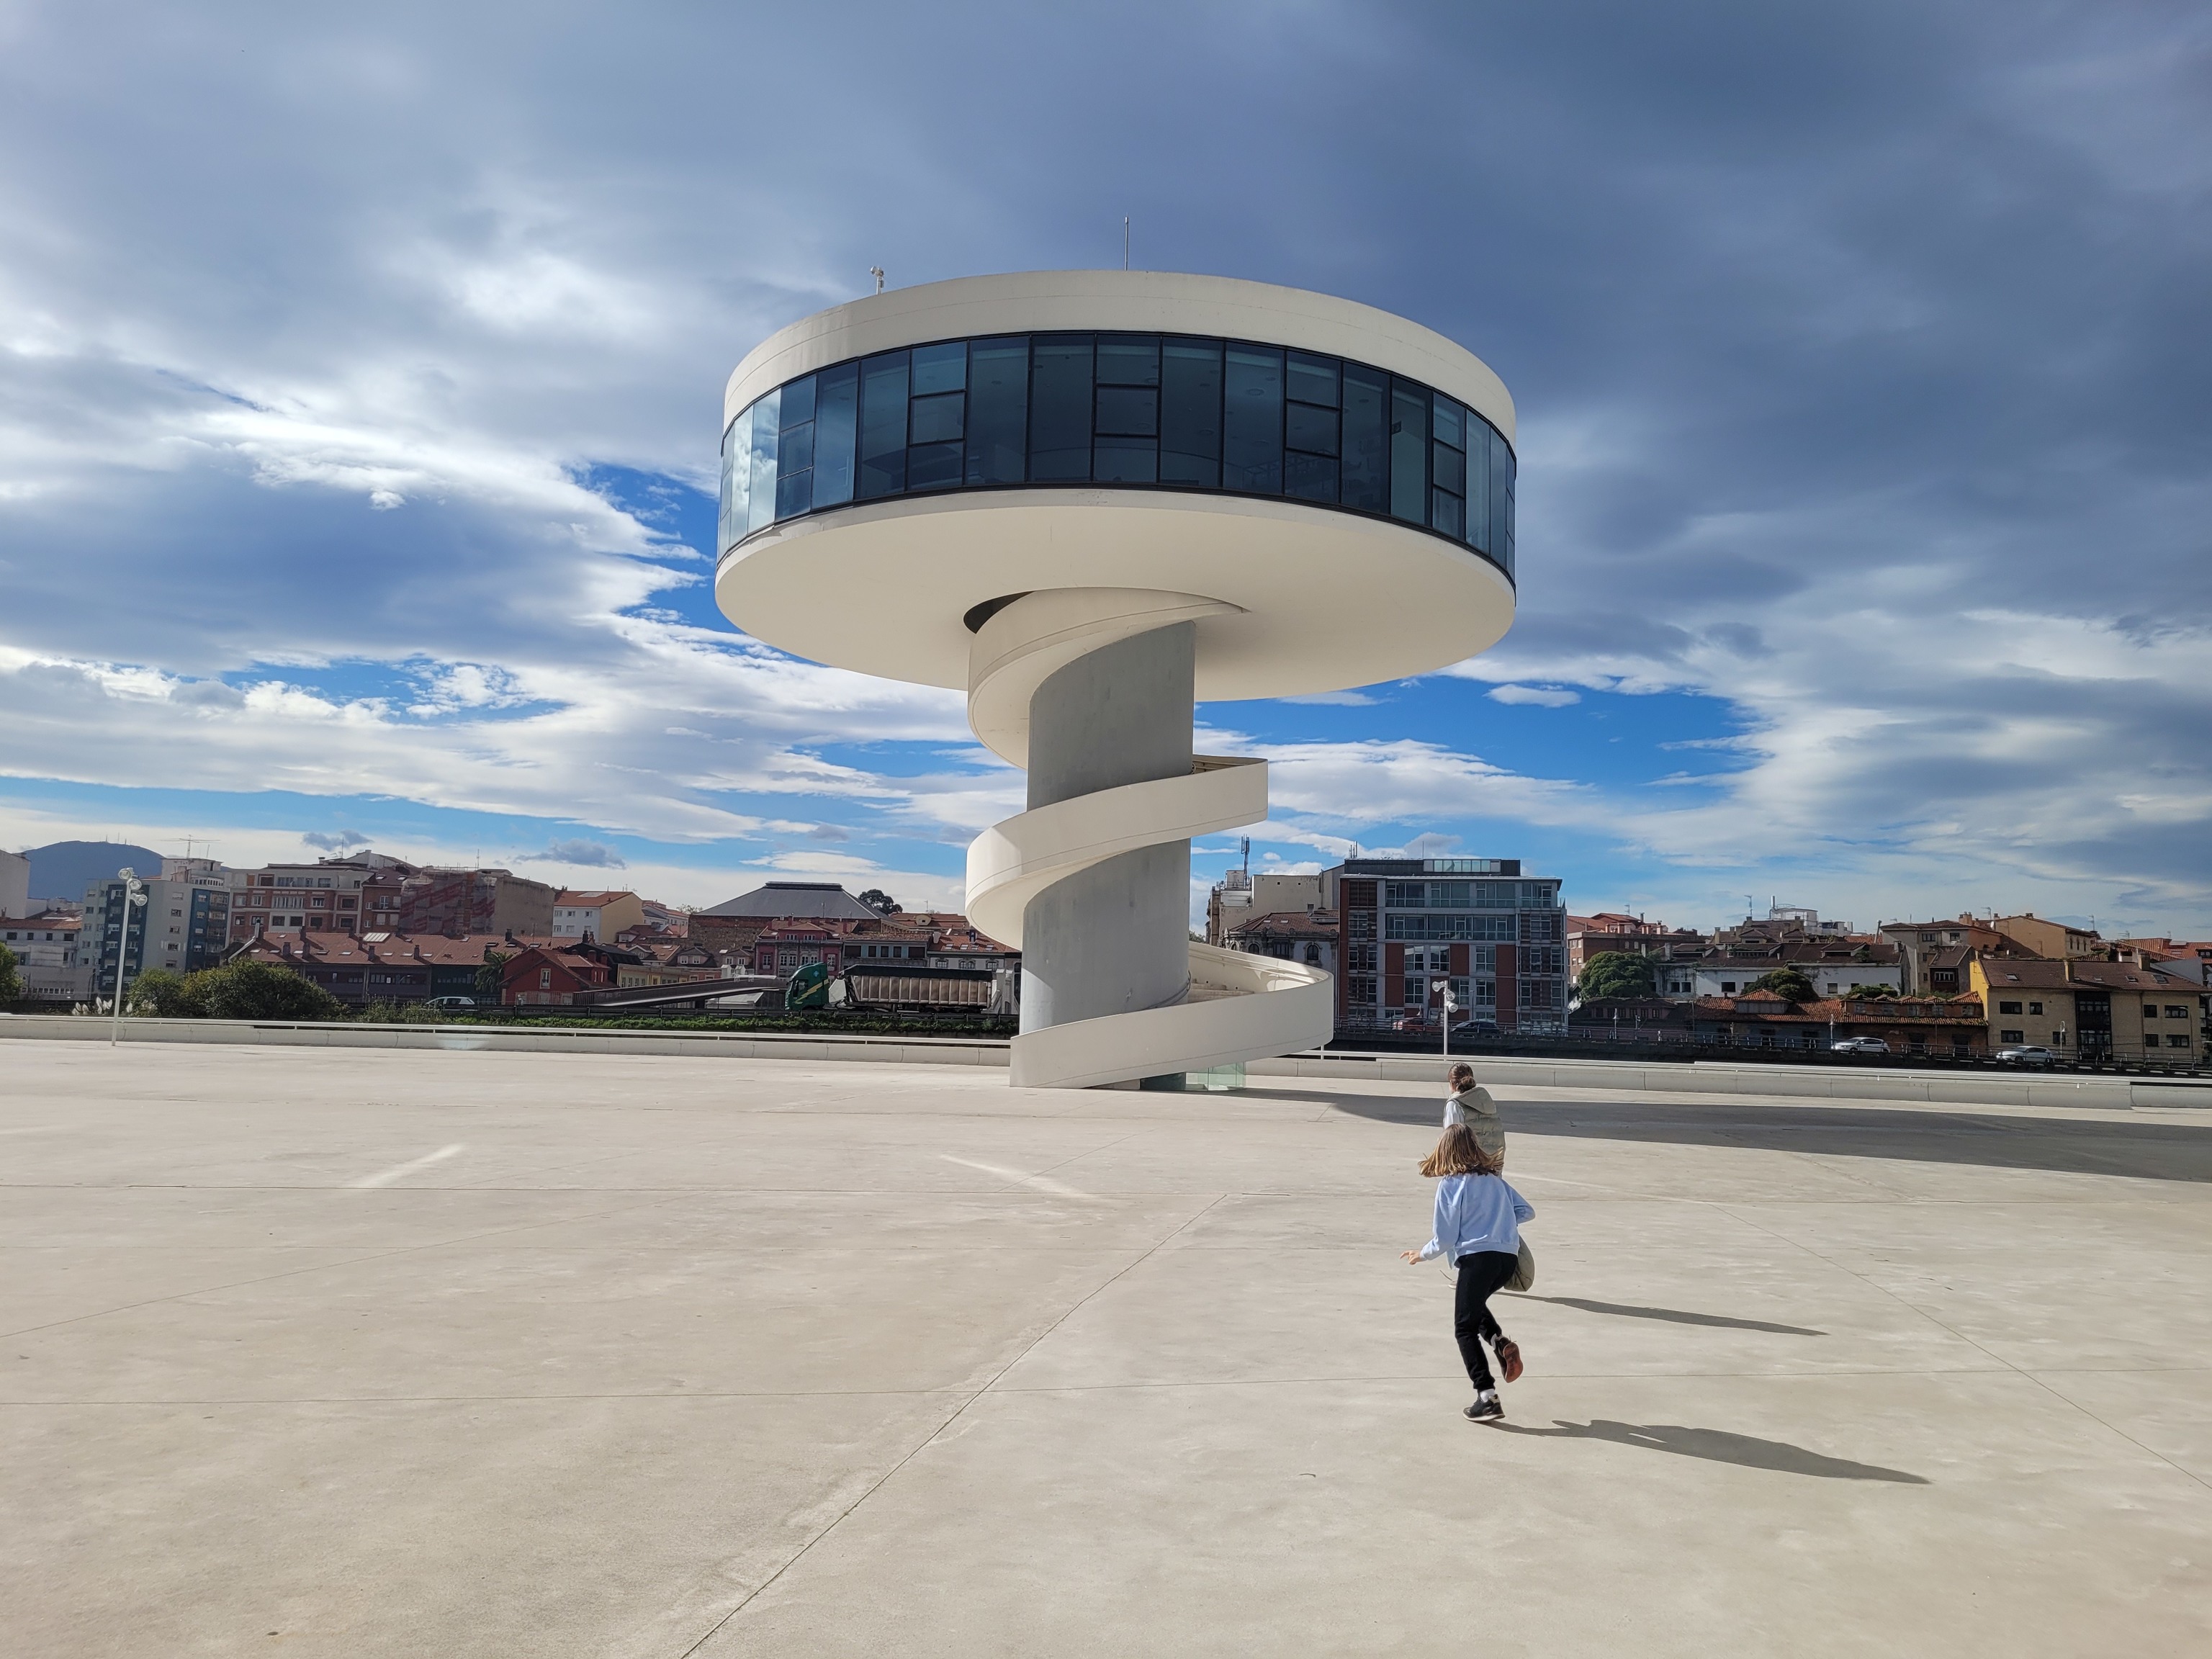 El Centro Niemeyer en Avilés.